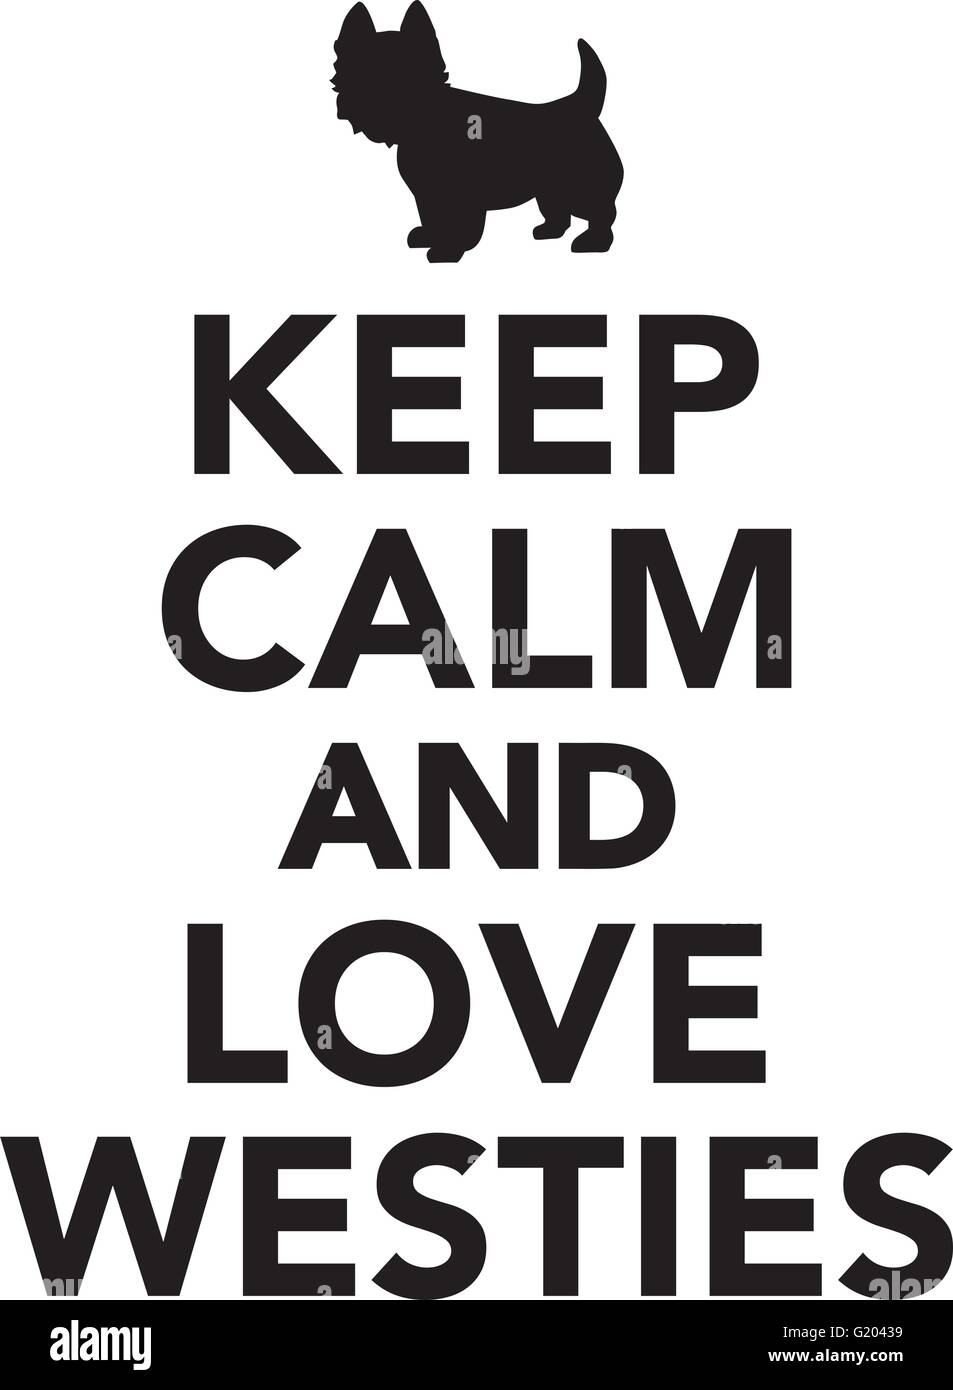 Keep calm and love westies Stock Vector